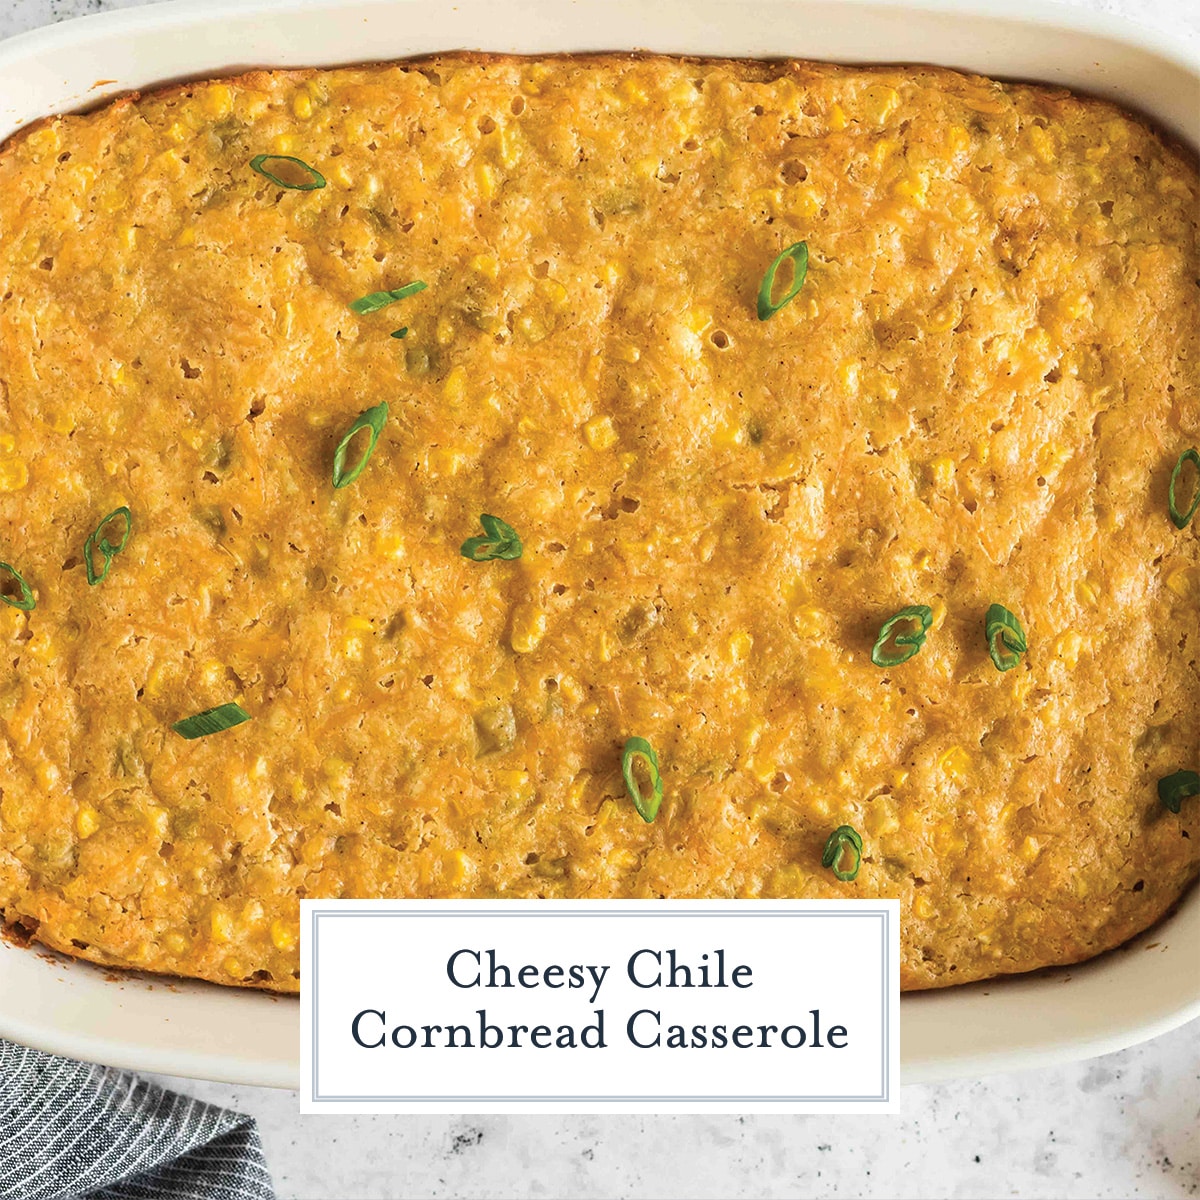 cornbread casserole with text overlay